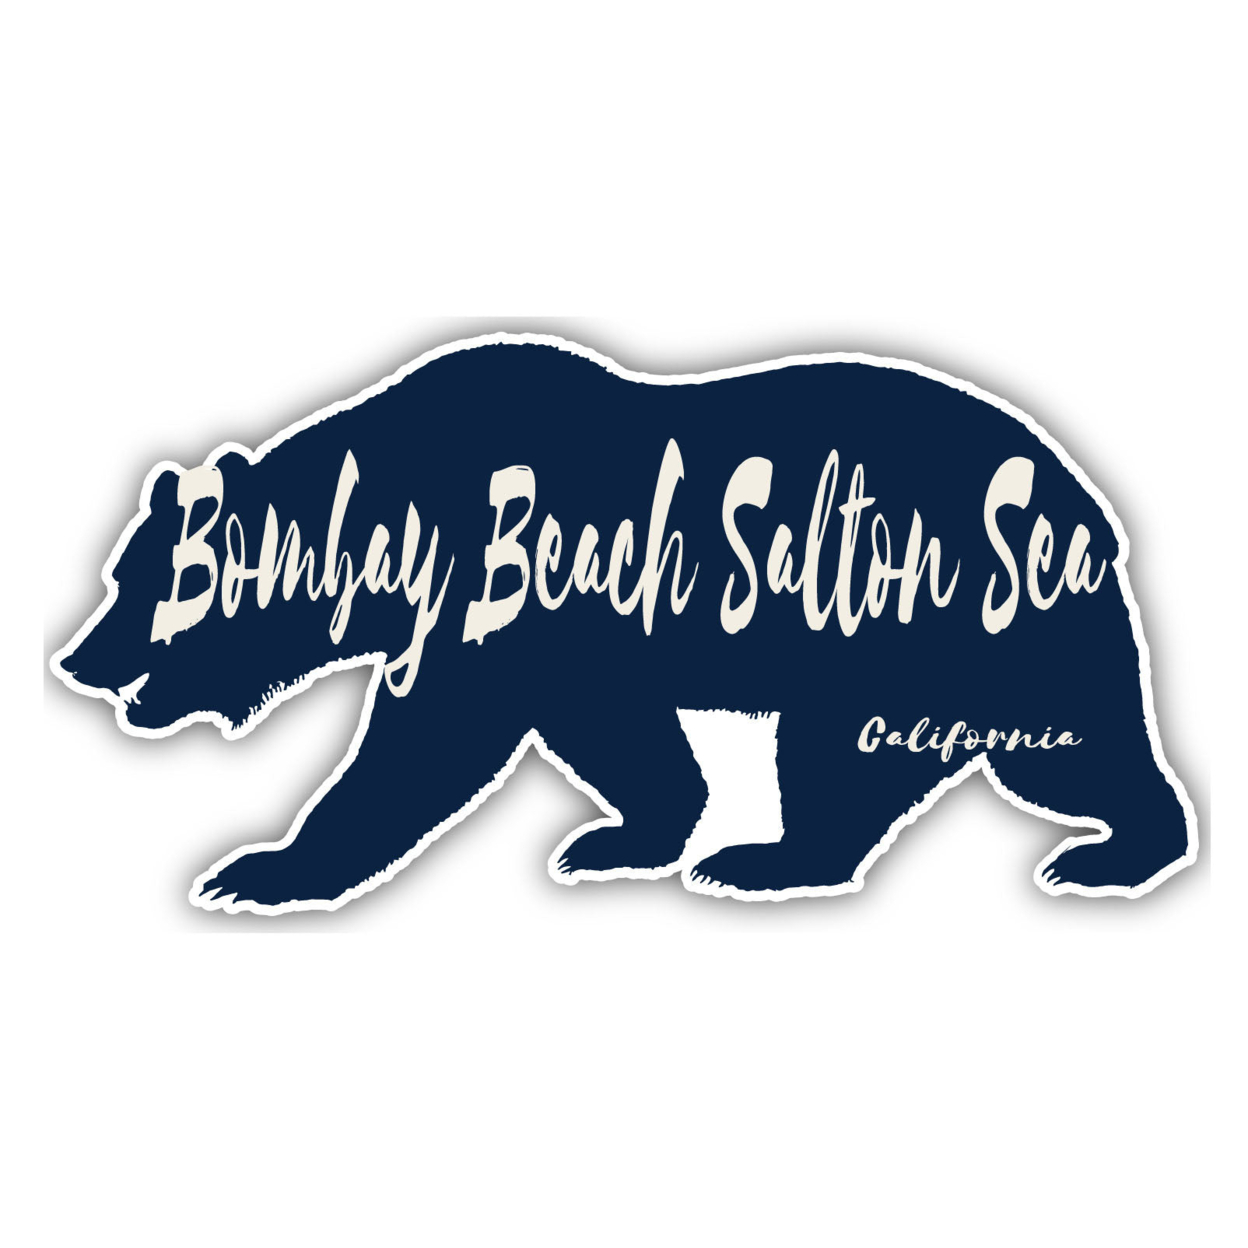 Bombay Beach Salton Sea California Souvenir Decorative Stickers (Choose Theme And Size) - 4-Pack, 8-Inch, Bear